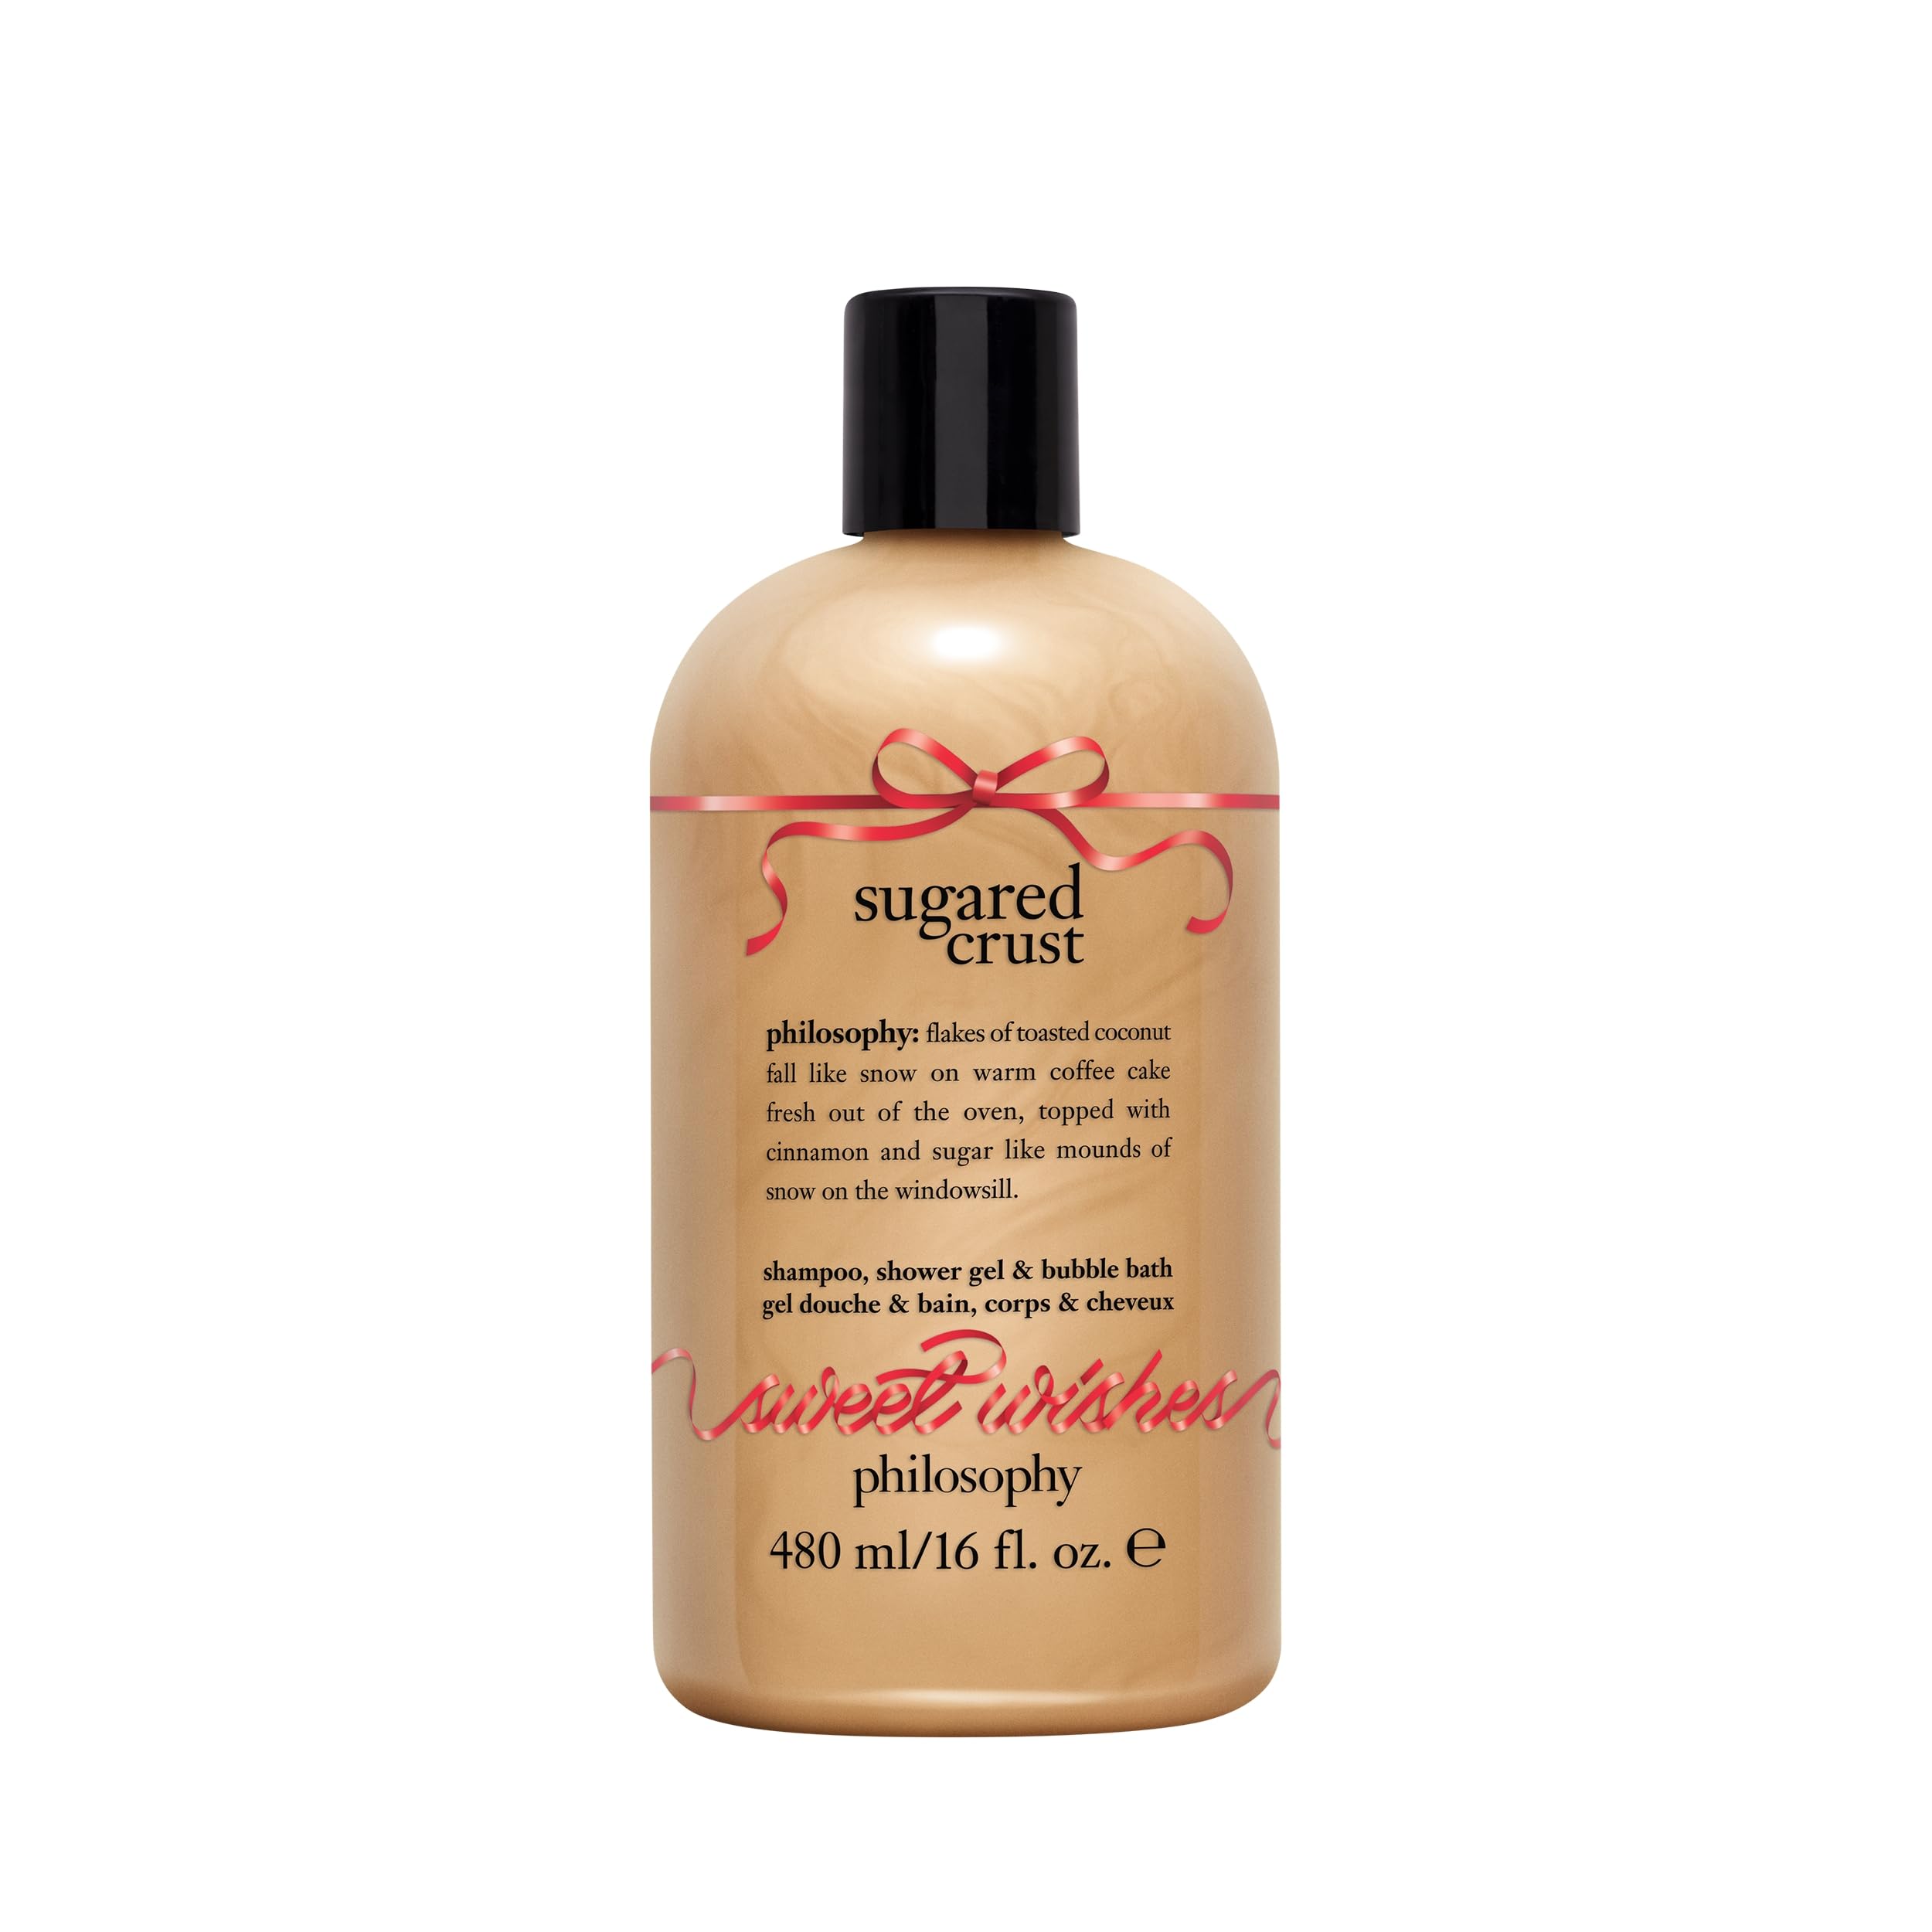 16-Oz Philosophy 3-in-1 Shampoo, Shower Gel & Bubble Bath (Sugared Crust) $9.50 w/ S&S + Free S&H w/ Prime or $35+